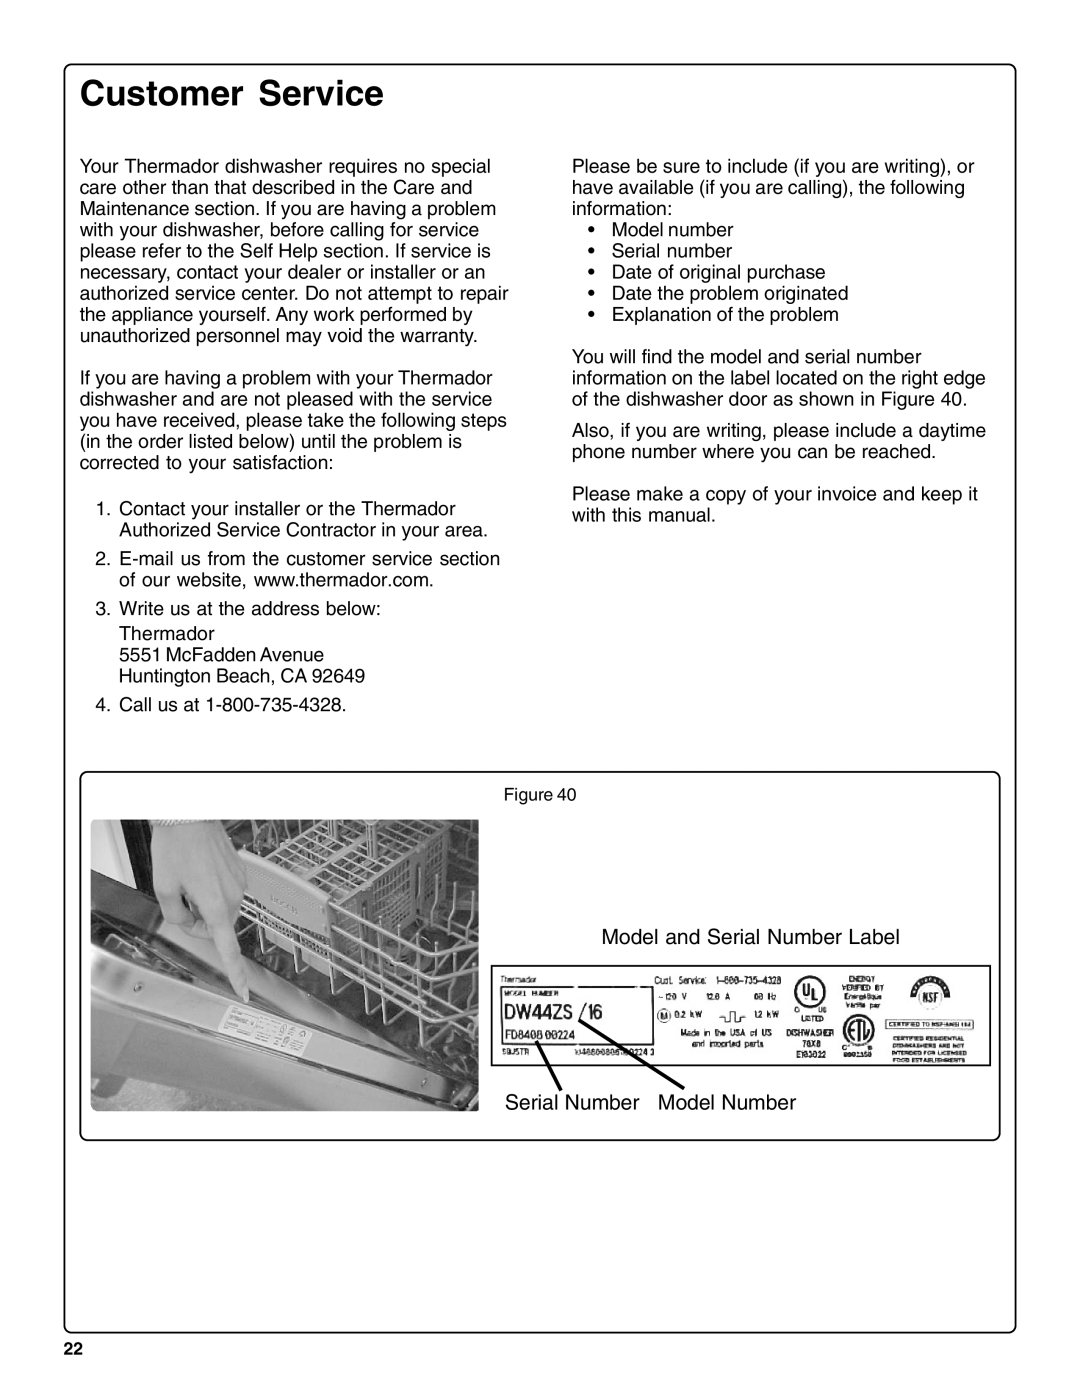 Thermador DWHD94BF manual Customer Service, Model and Serial Number Label Serial Number Model Number 